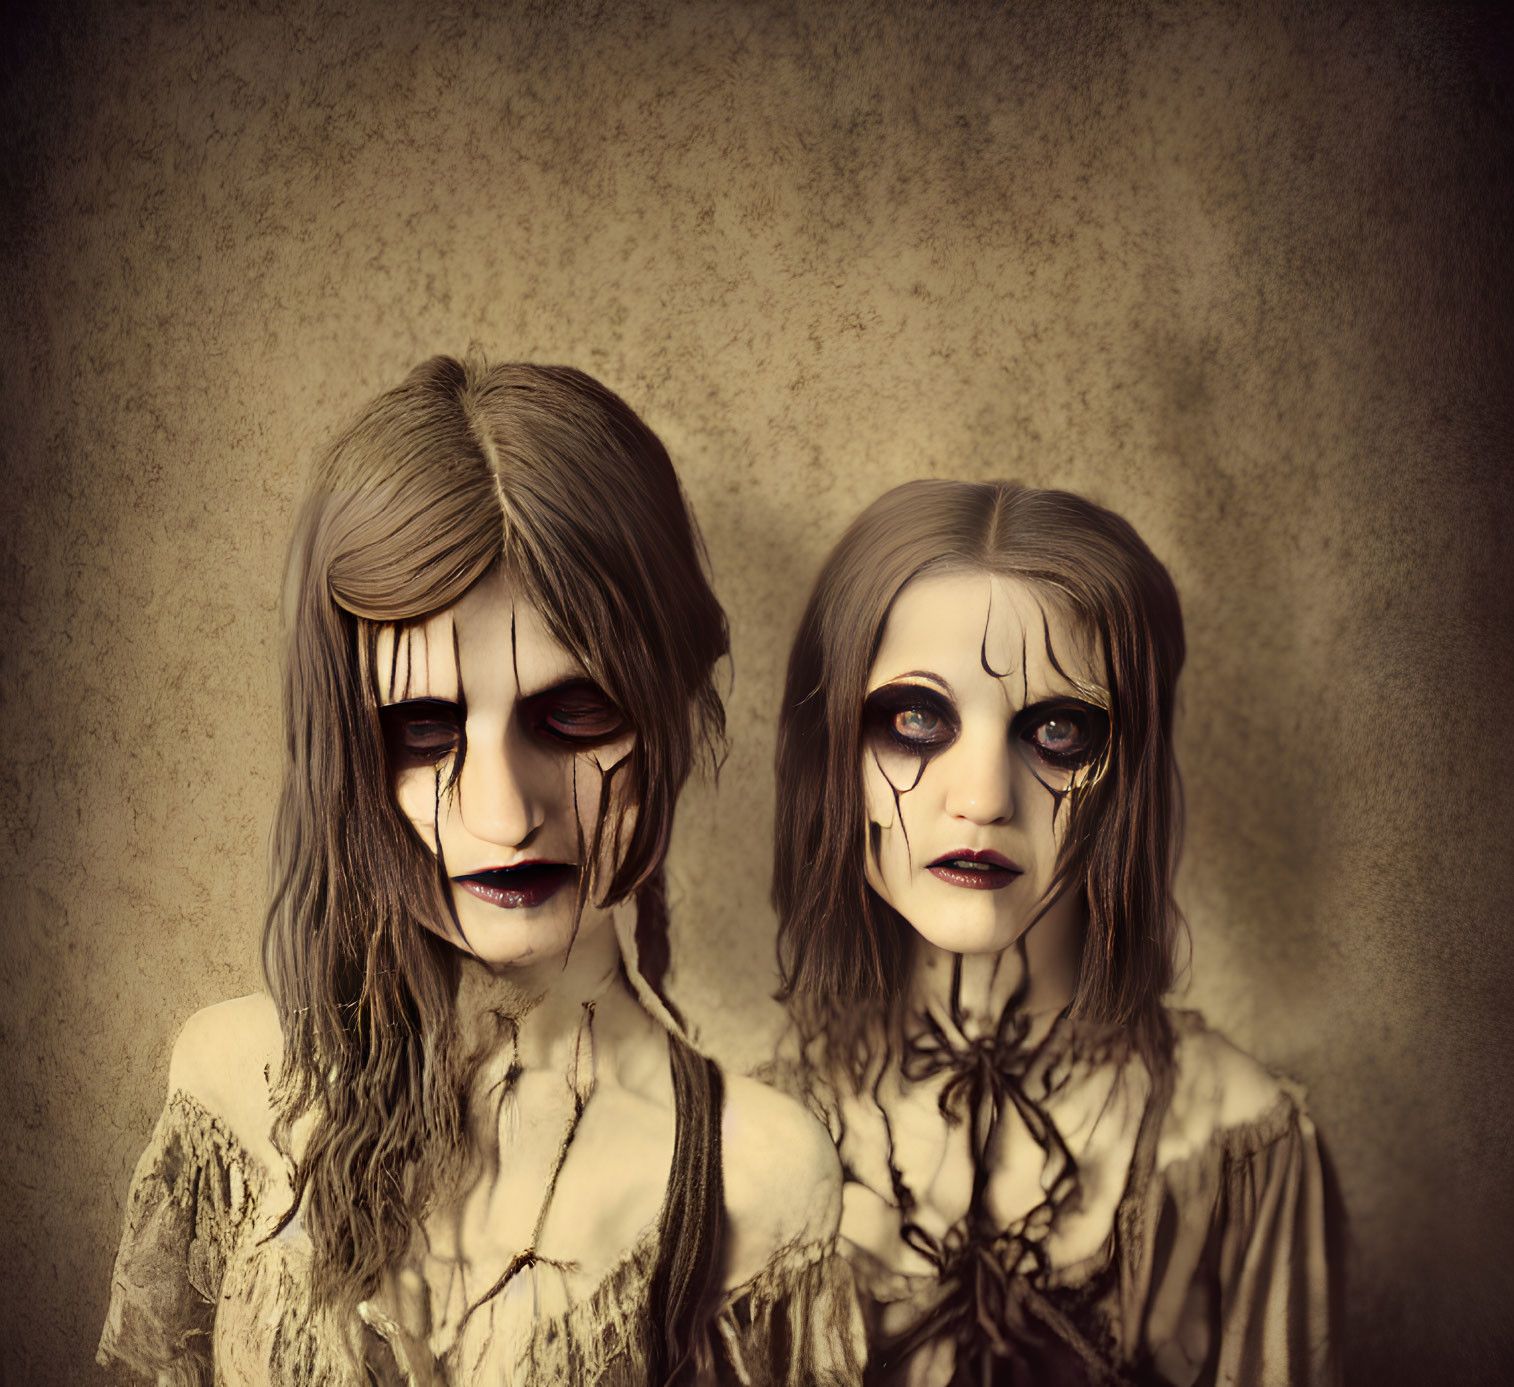 Individuals with eerie makeup resembling broken dolls against textured backdrop